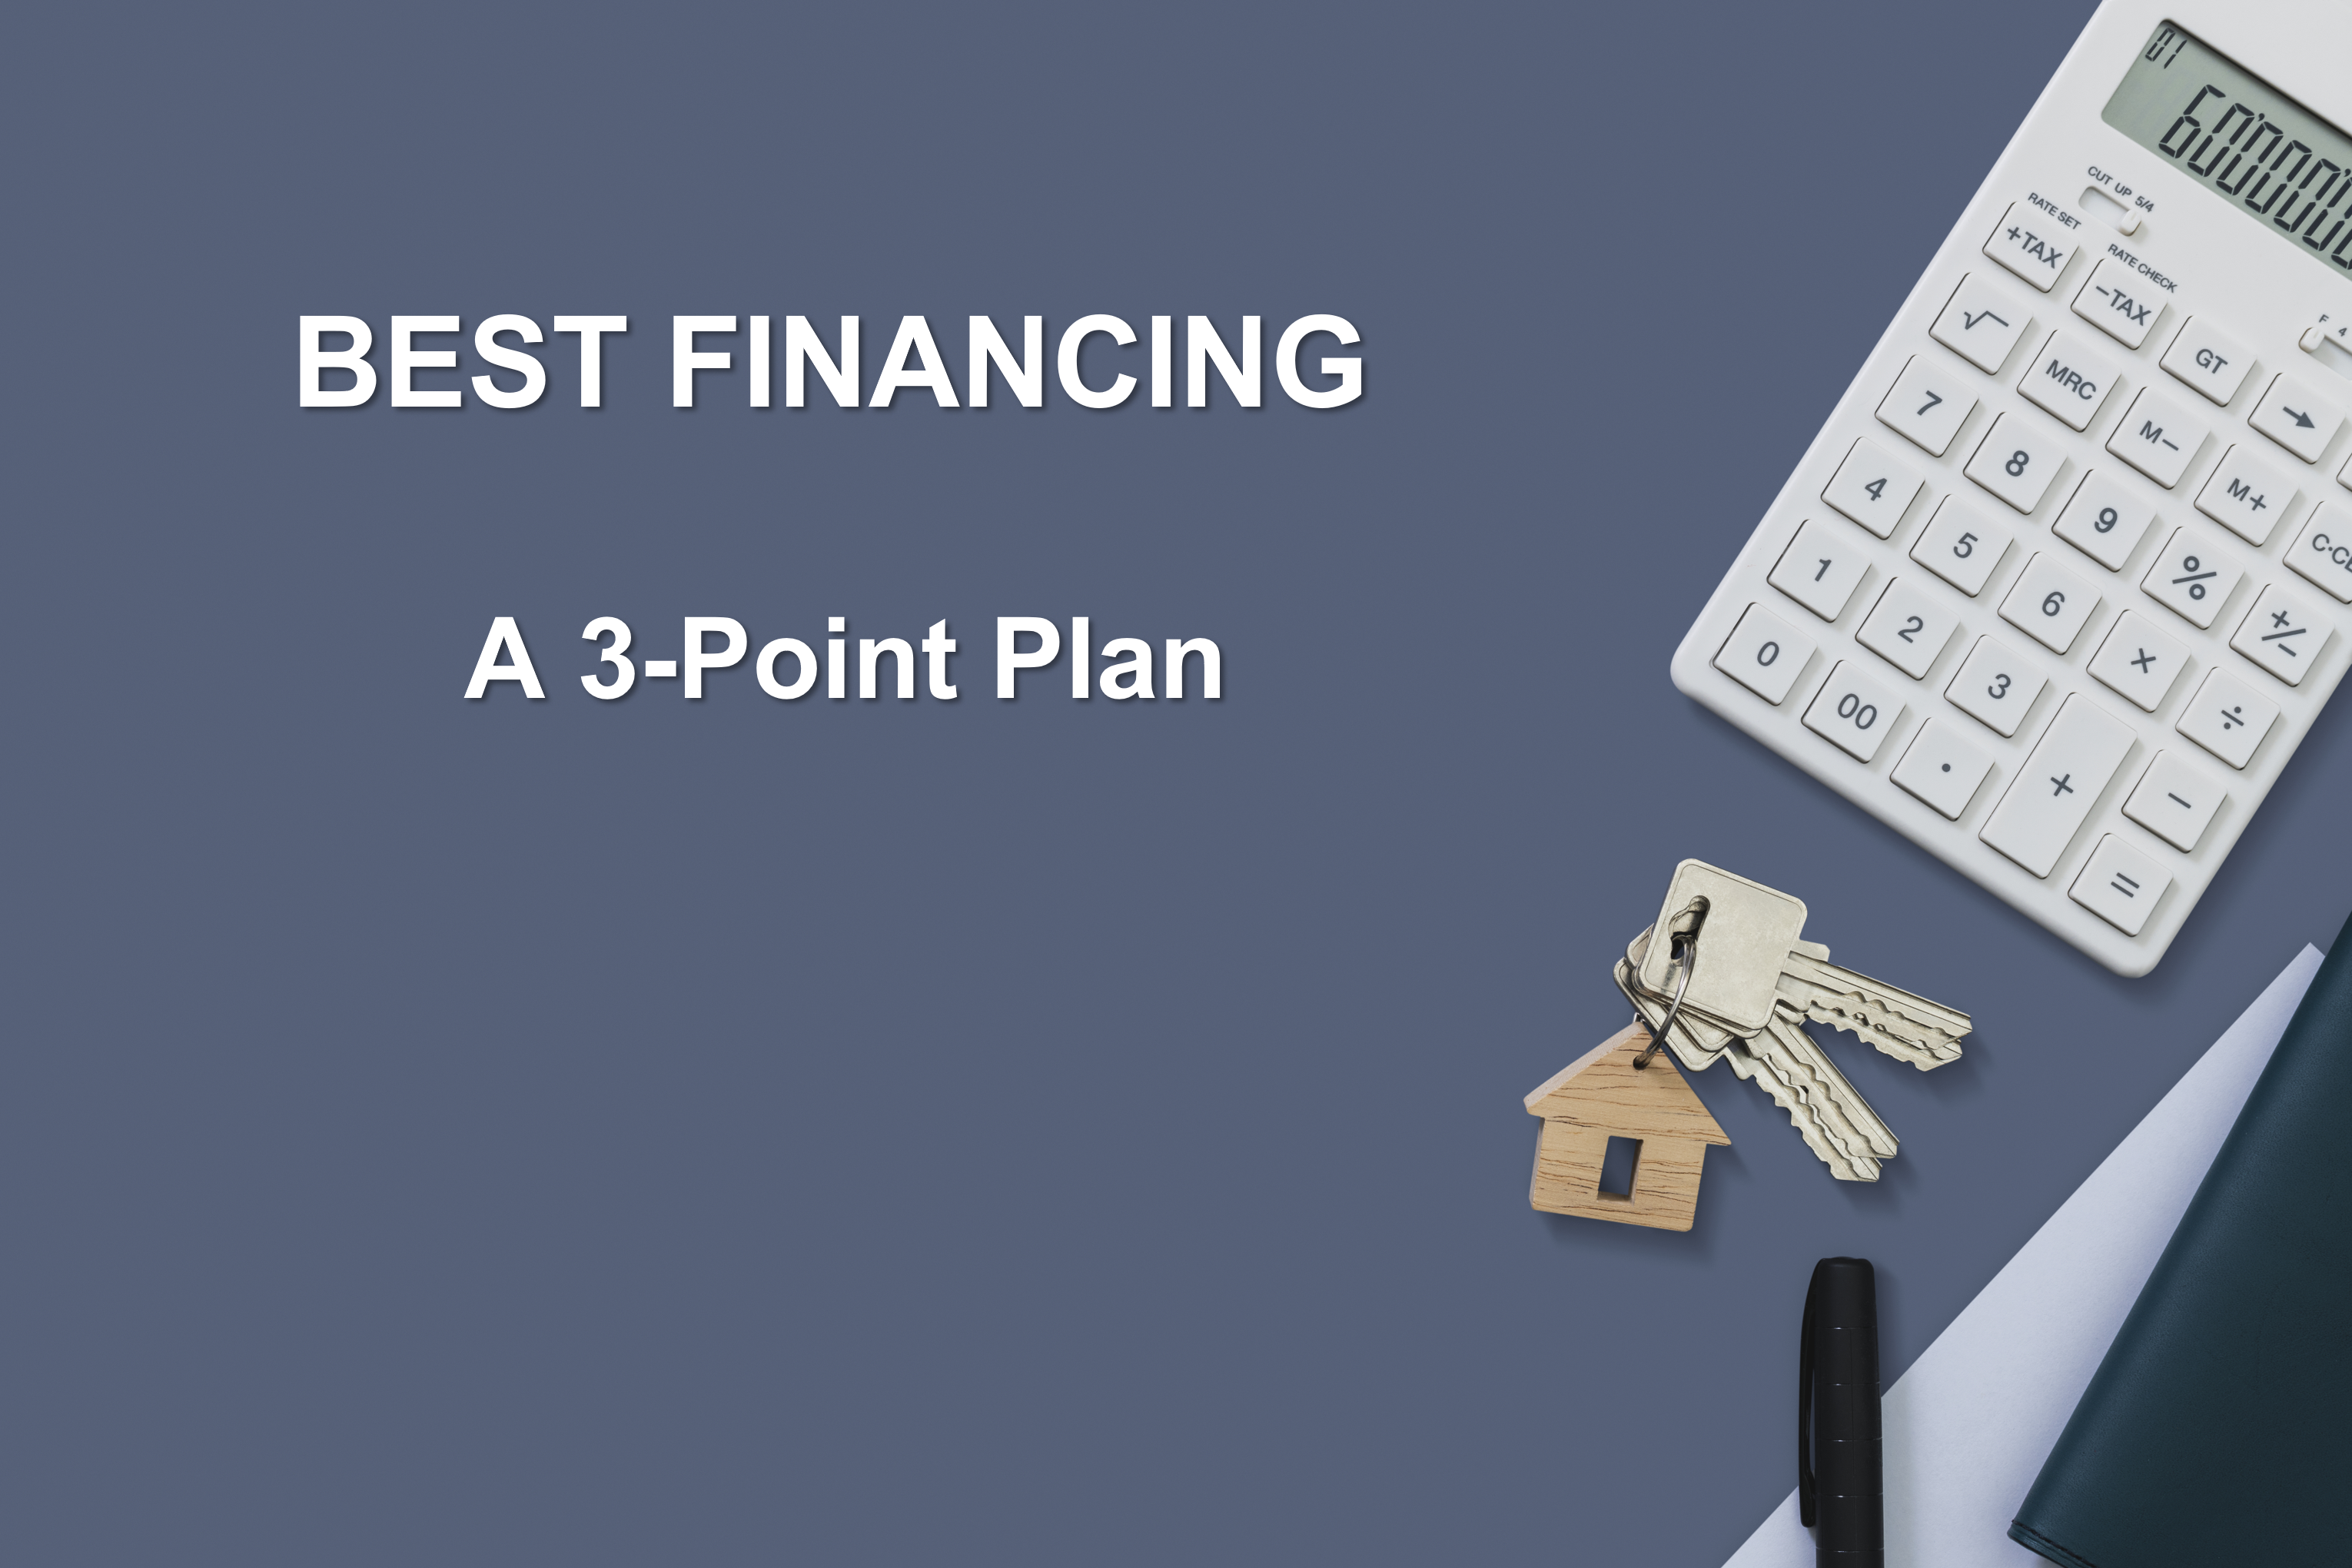 Best Financing: A 3-Point Plan